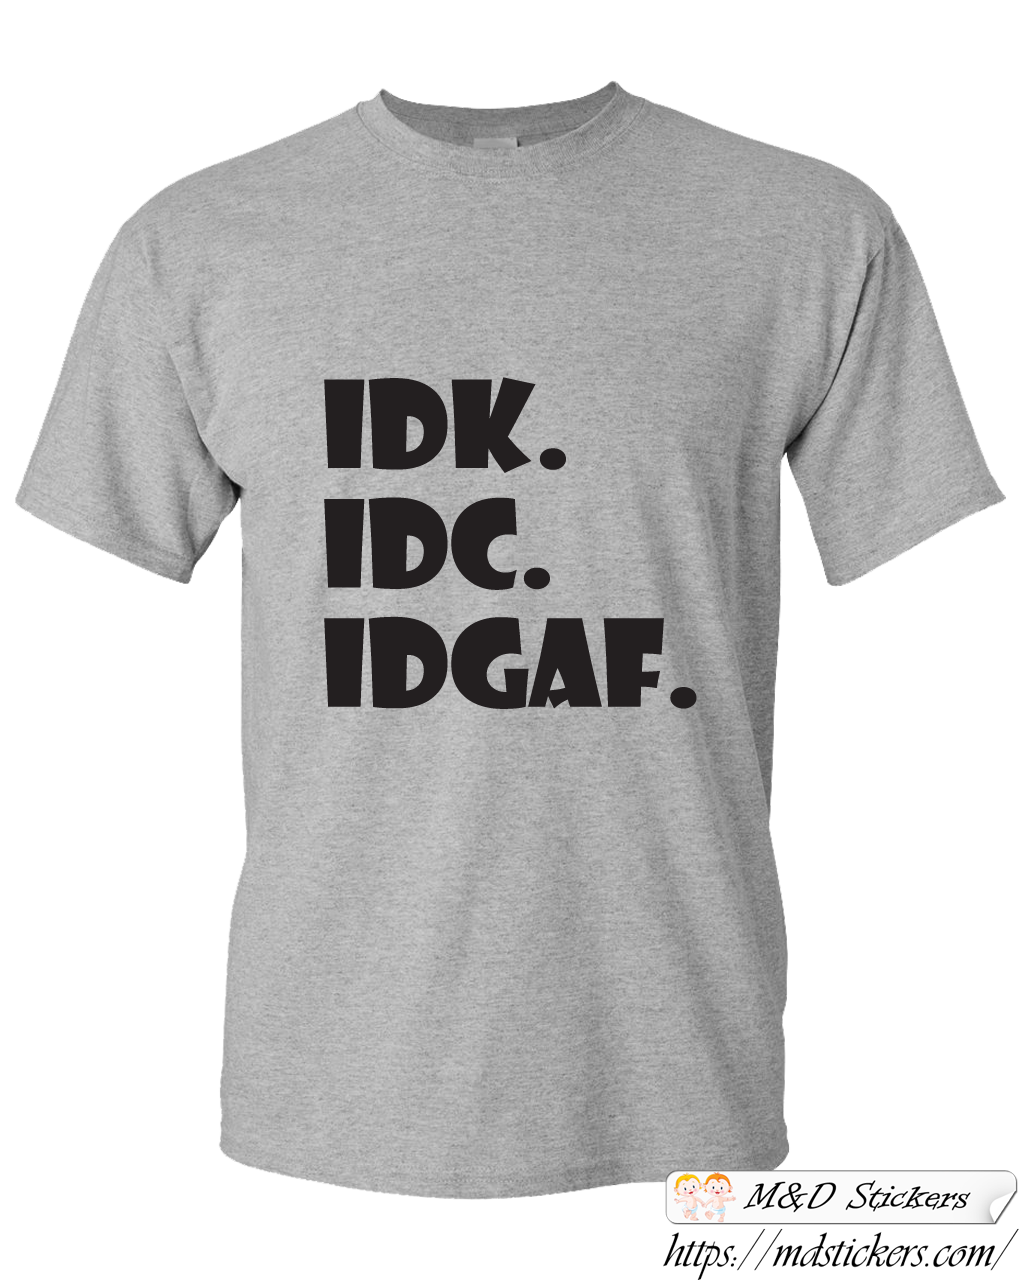 Custom T-shirt idk idc idgaf funny tshirt